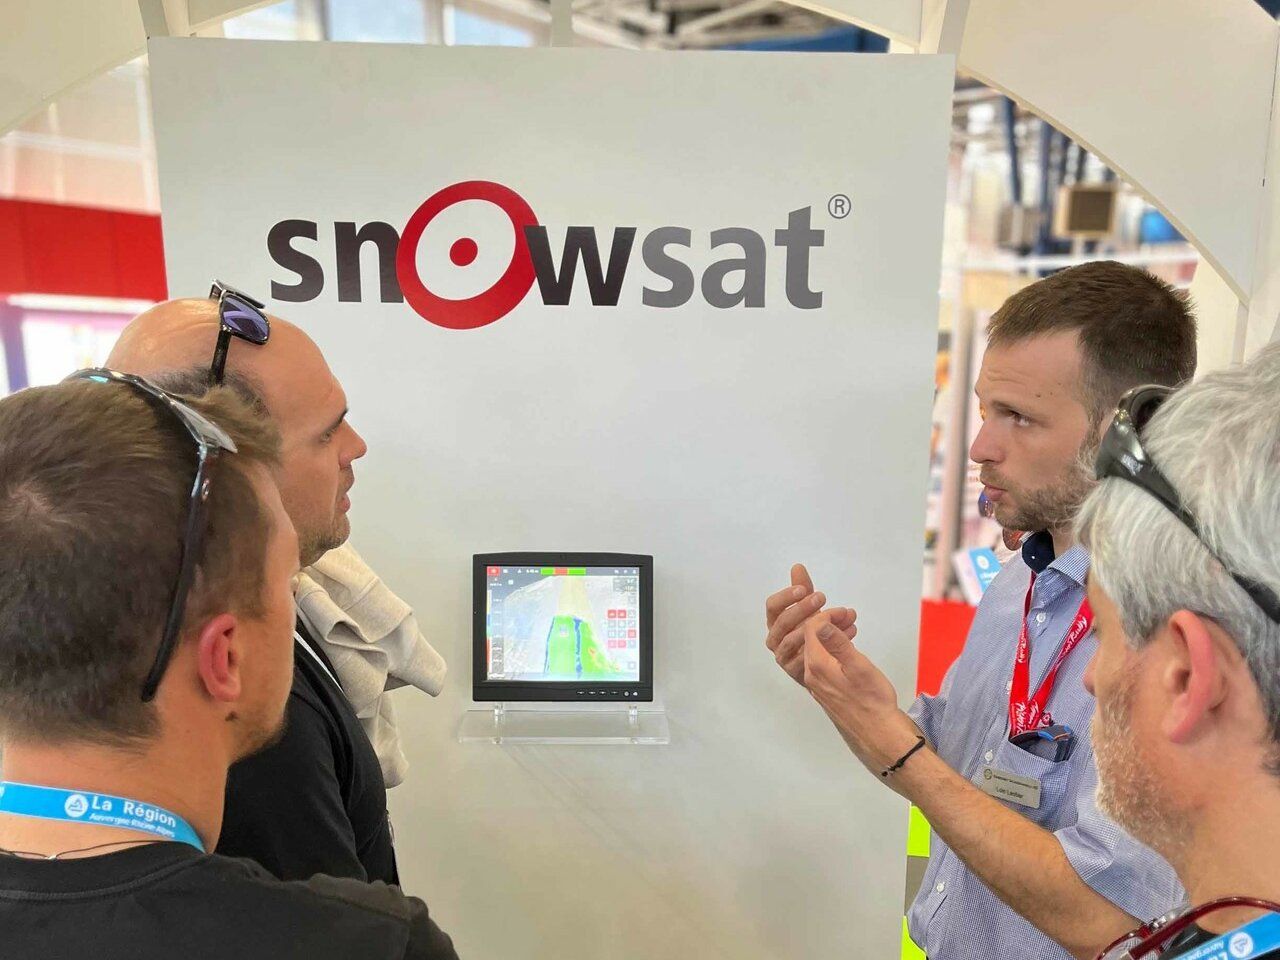 SNOWsat team member presents the software